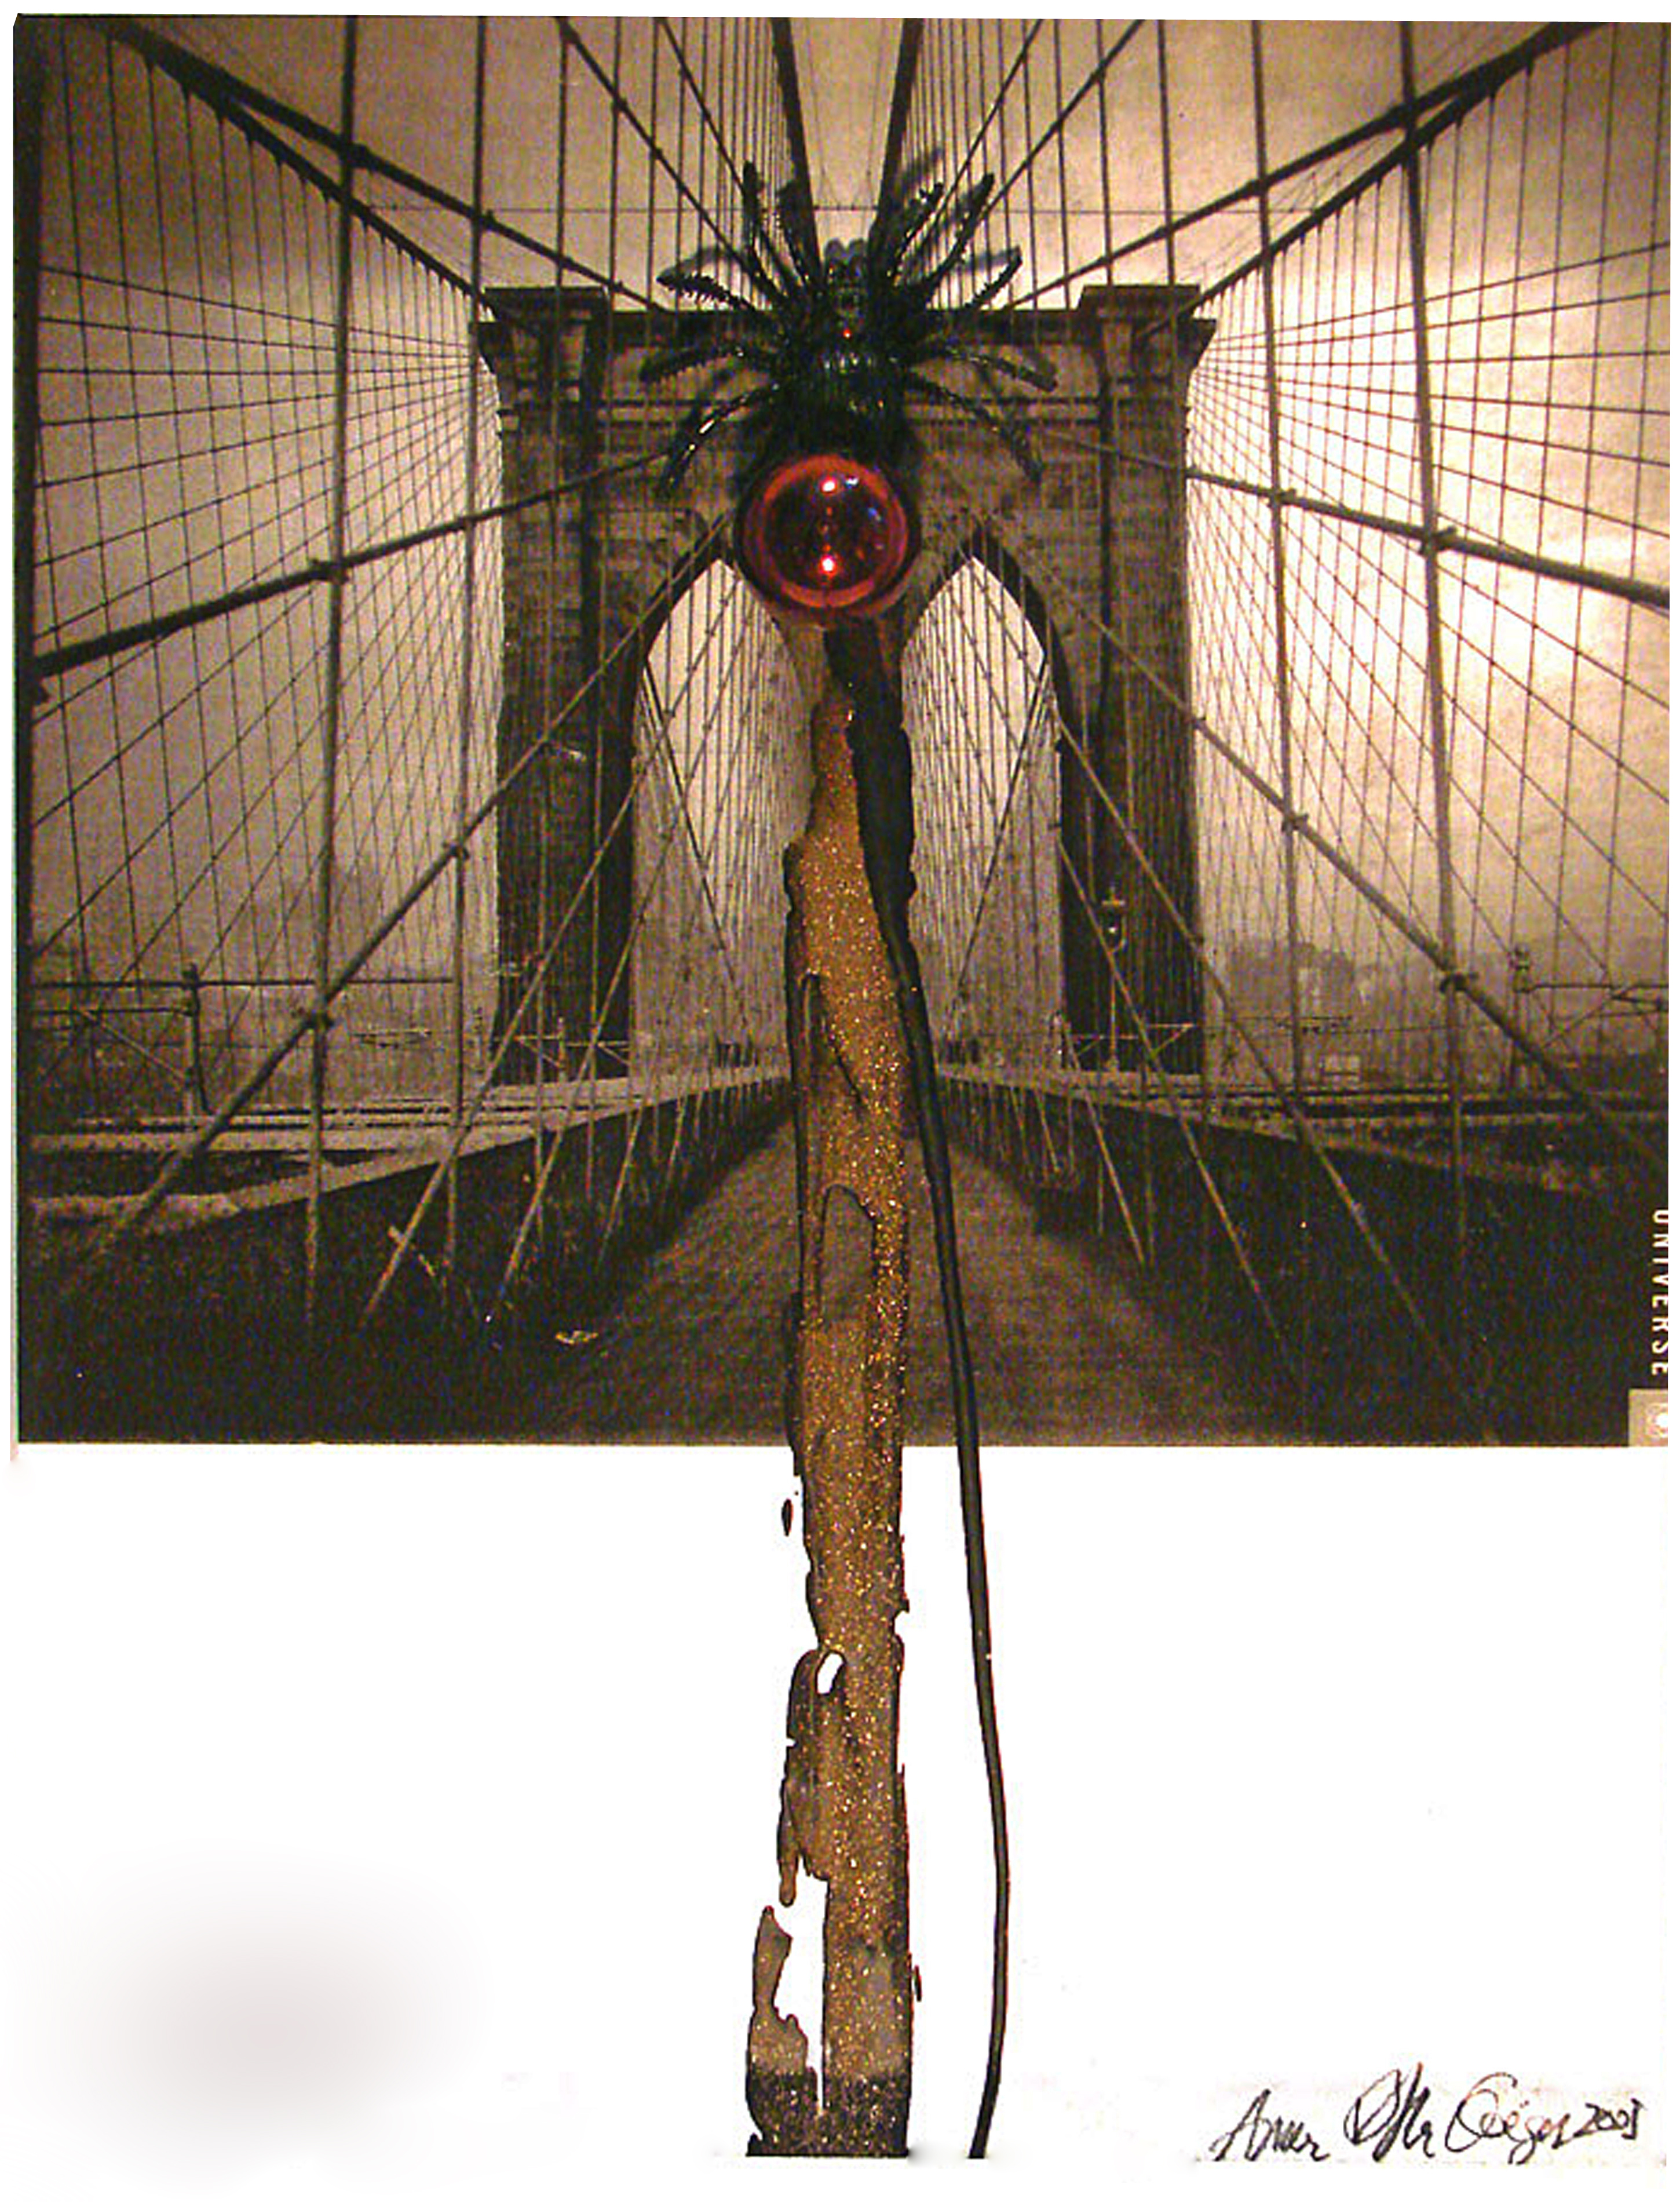 Anna Bella Geiger, Flumenpont n°2, Universe New York, Fotografia, encáustica, vidro, plástico e limalha, 39 x 31 cm, 2001-2005.